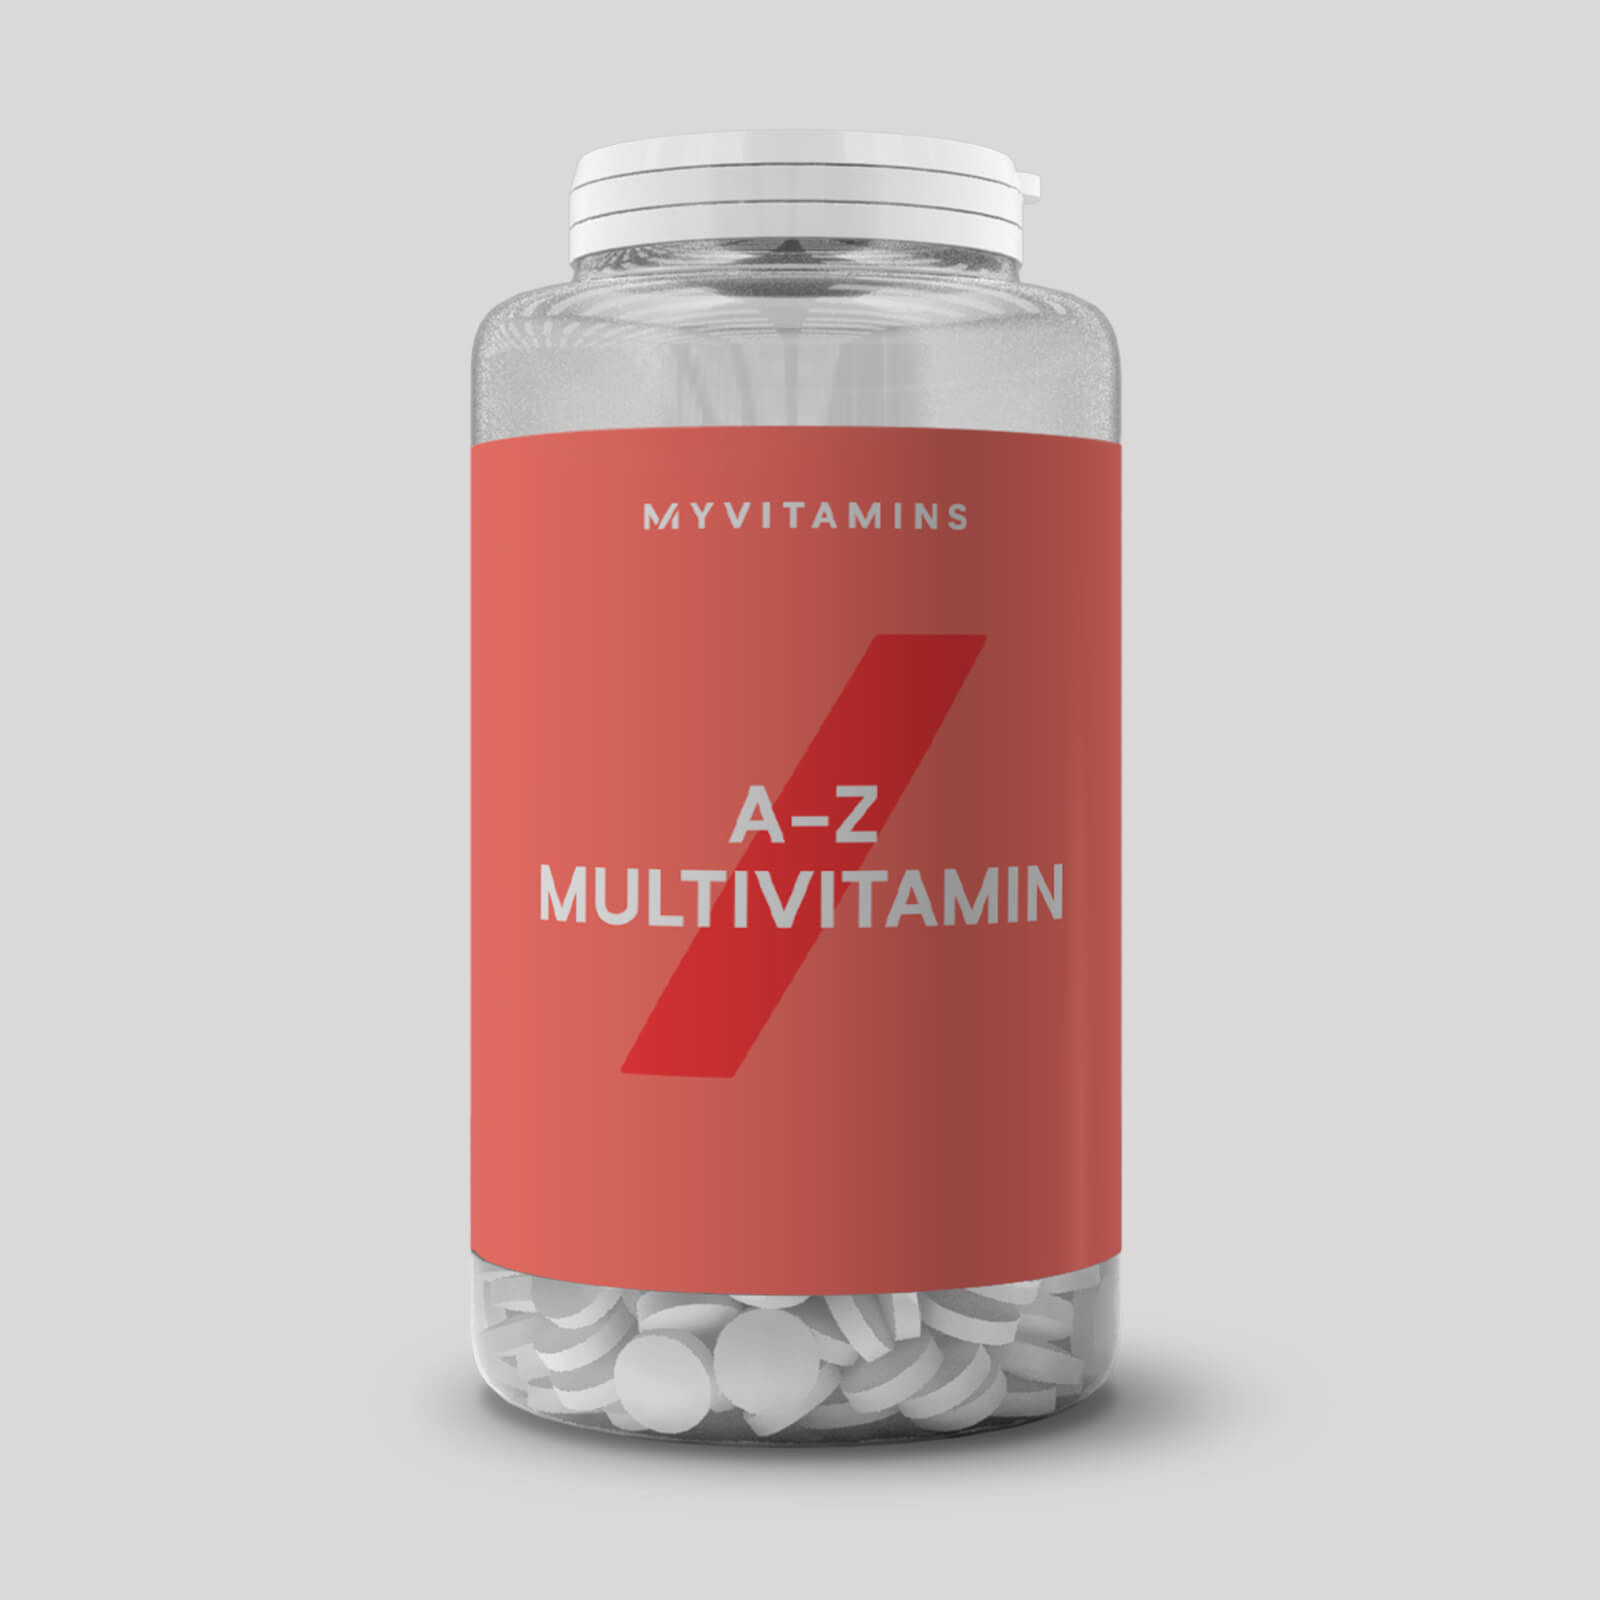 Myvitamins Myvitamins A-Z Multivitamin - 90Tablets